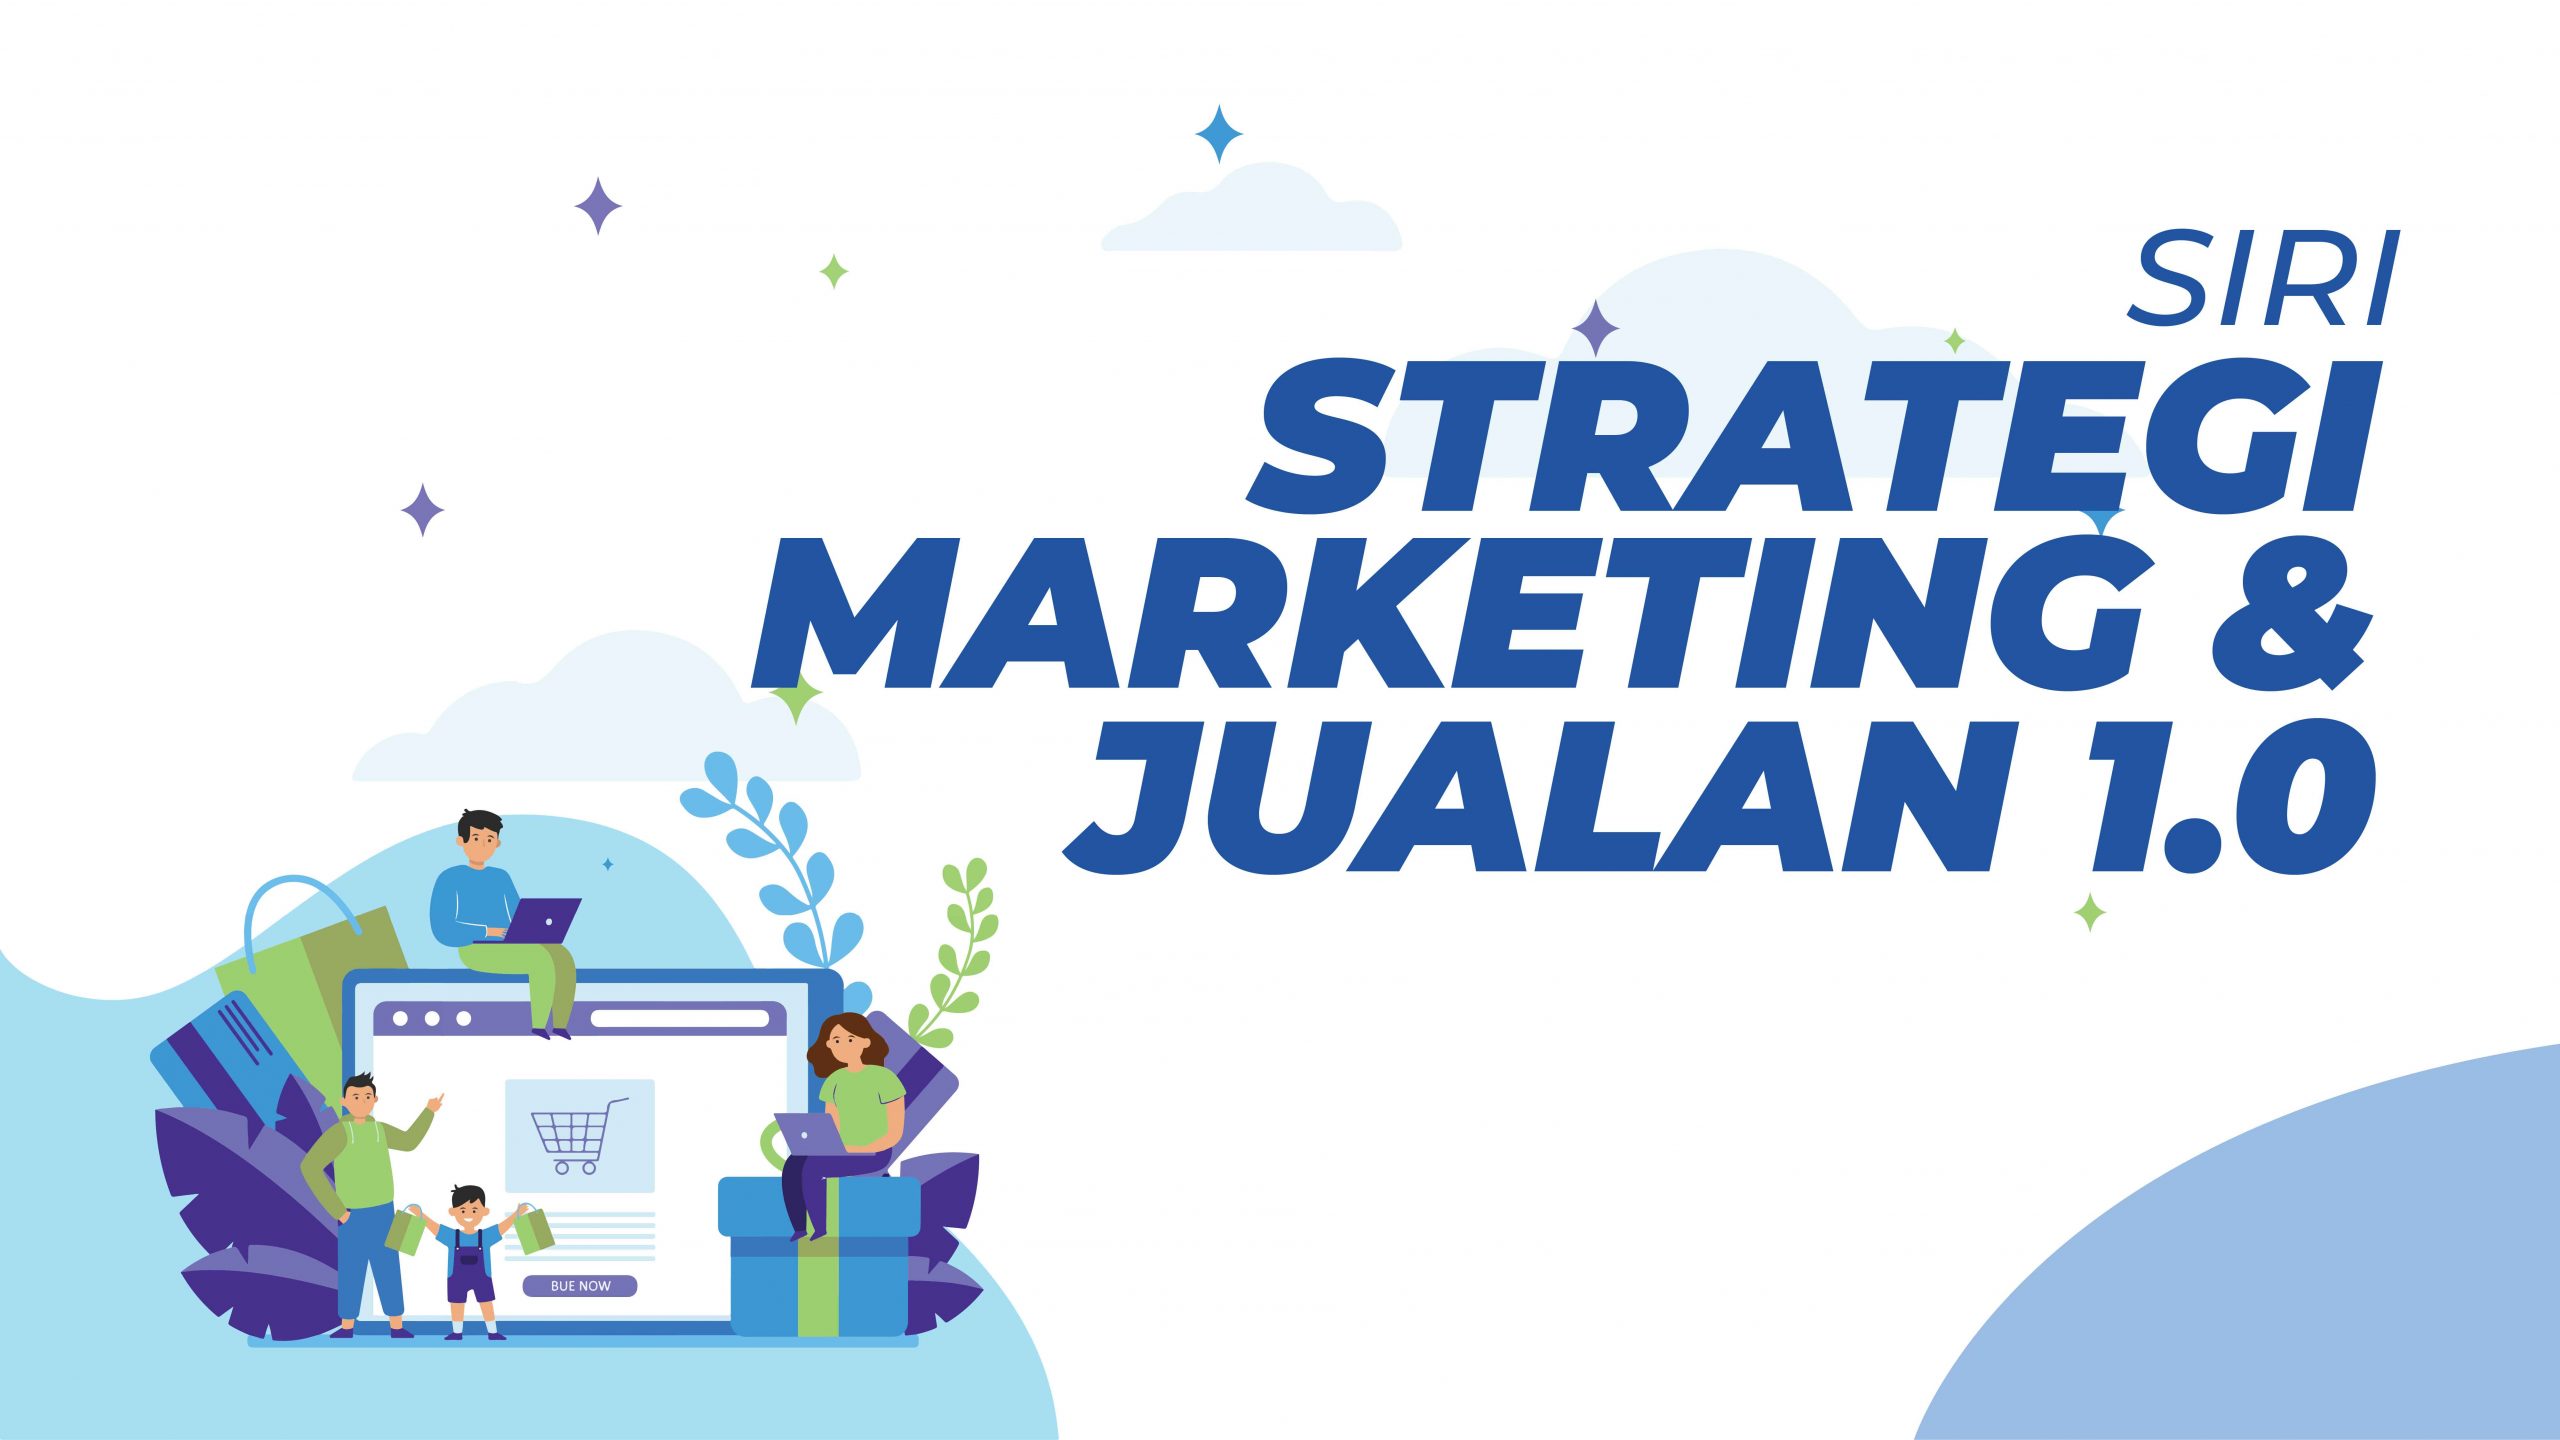 Siri Strategi Marketing & Jualan